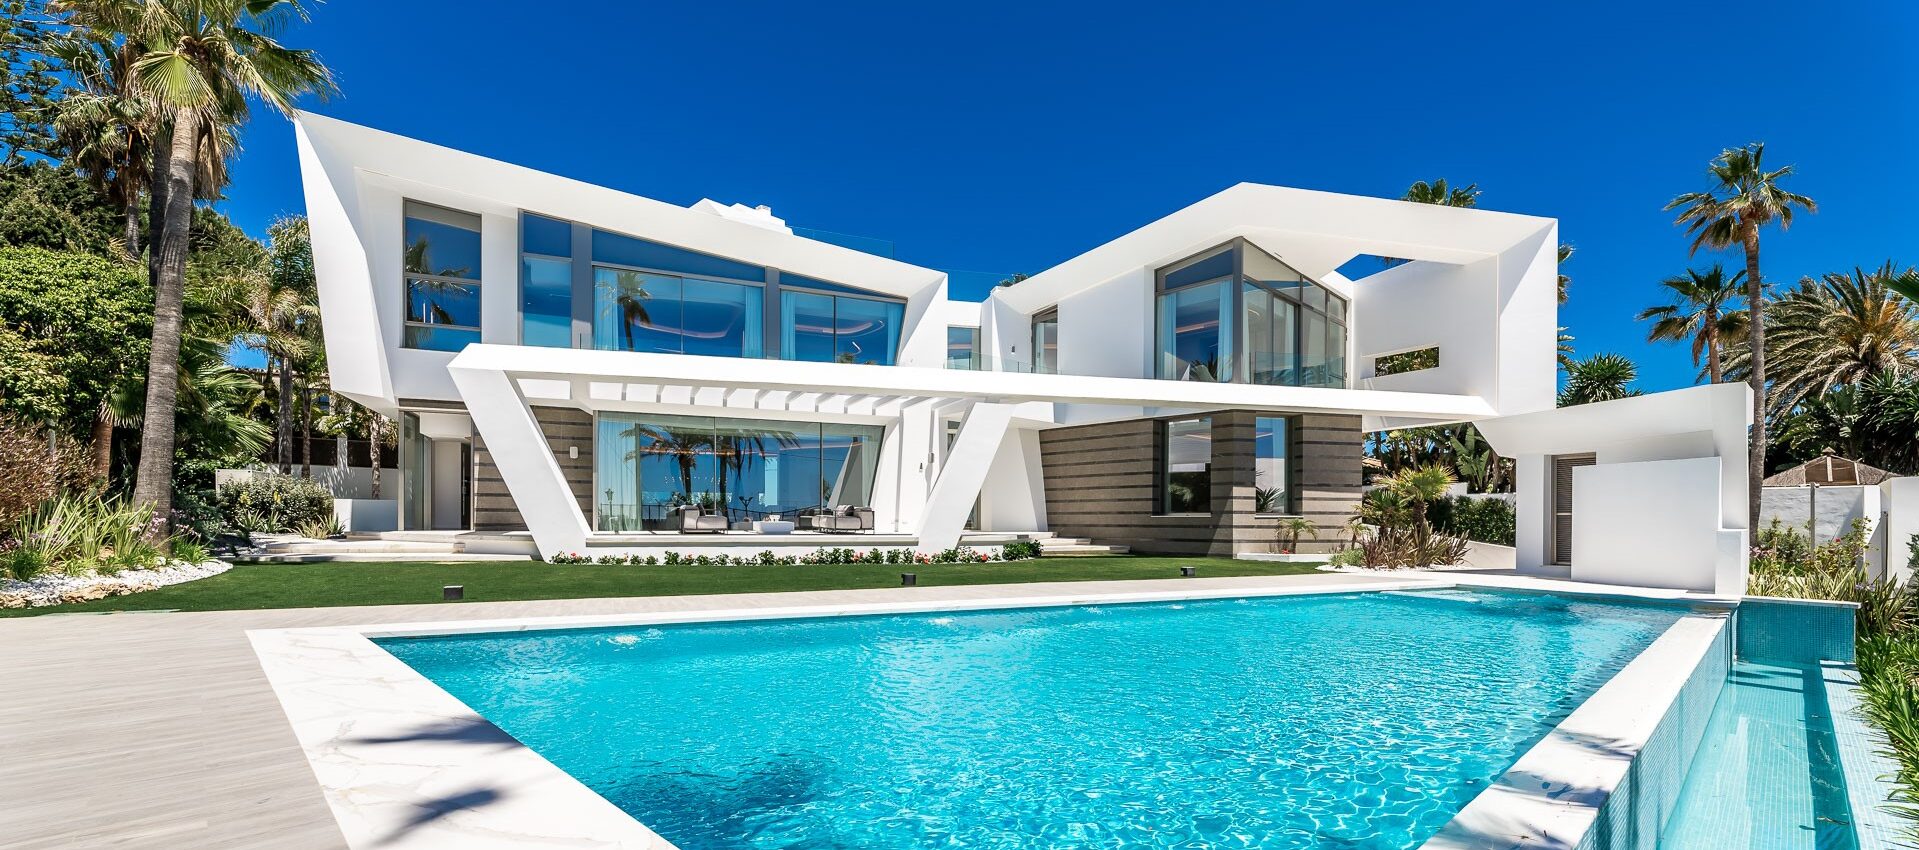 Impressive newly built villa located on the beach of Los Monteros